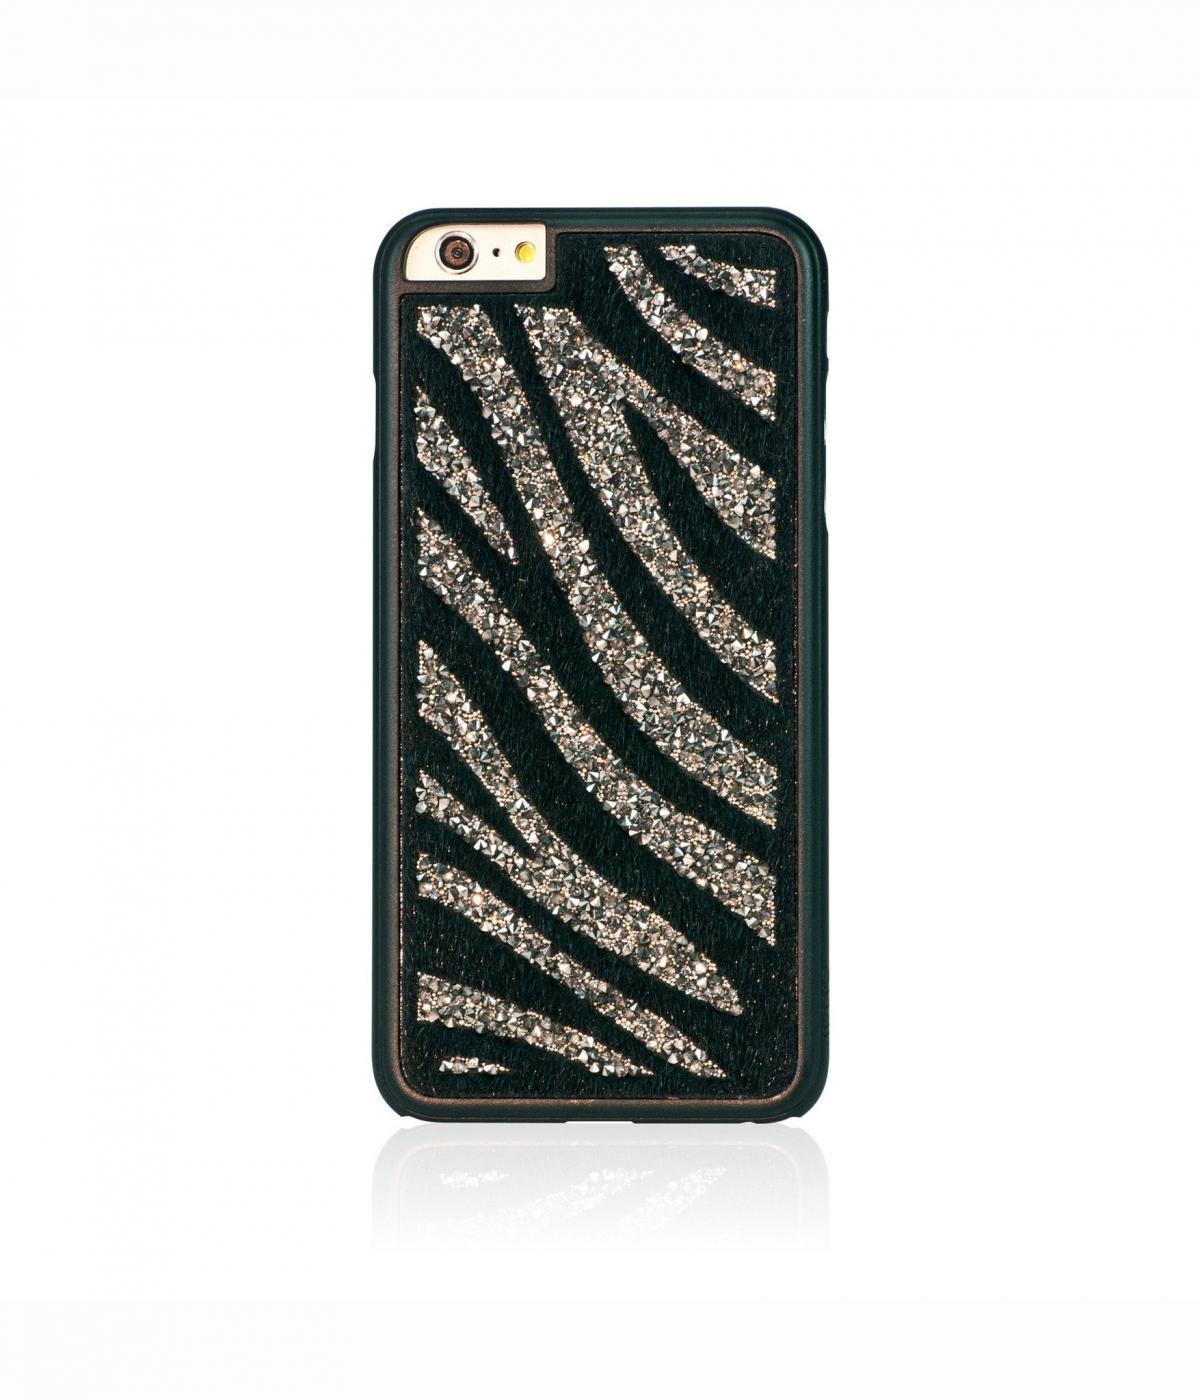  Чехол-накладка Bling My Thing Glam для Apple iPhone 6 Plus/6S Plus Glam Zebra (Black Diamond)